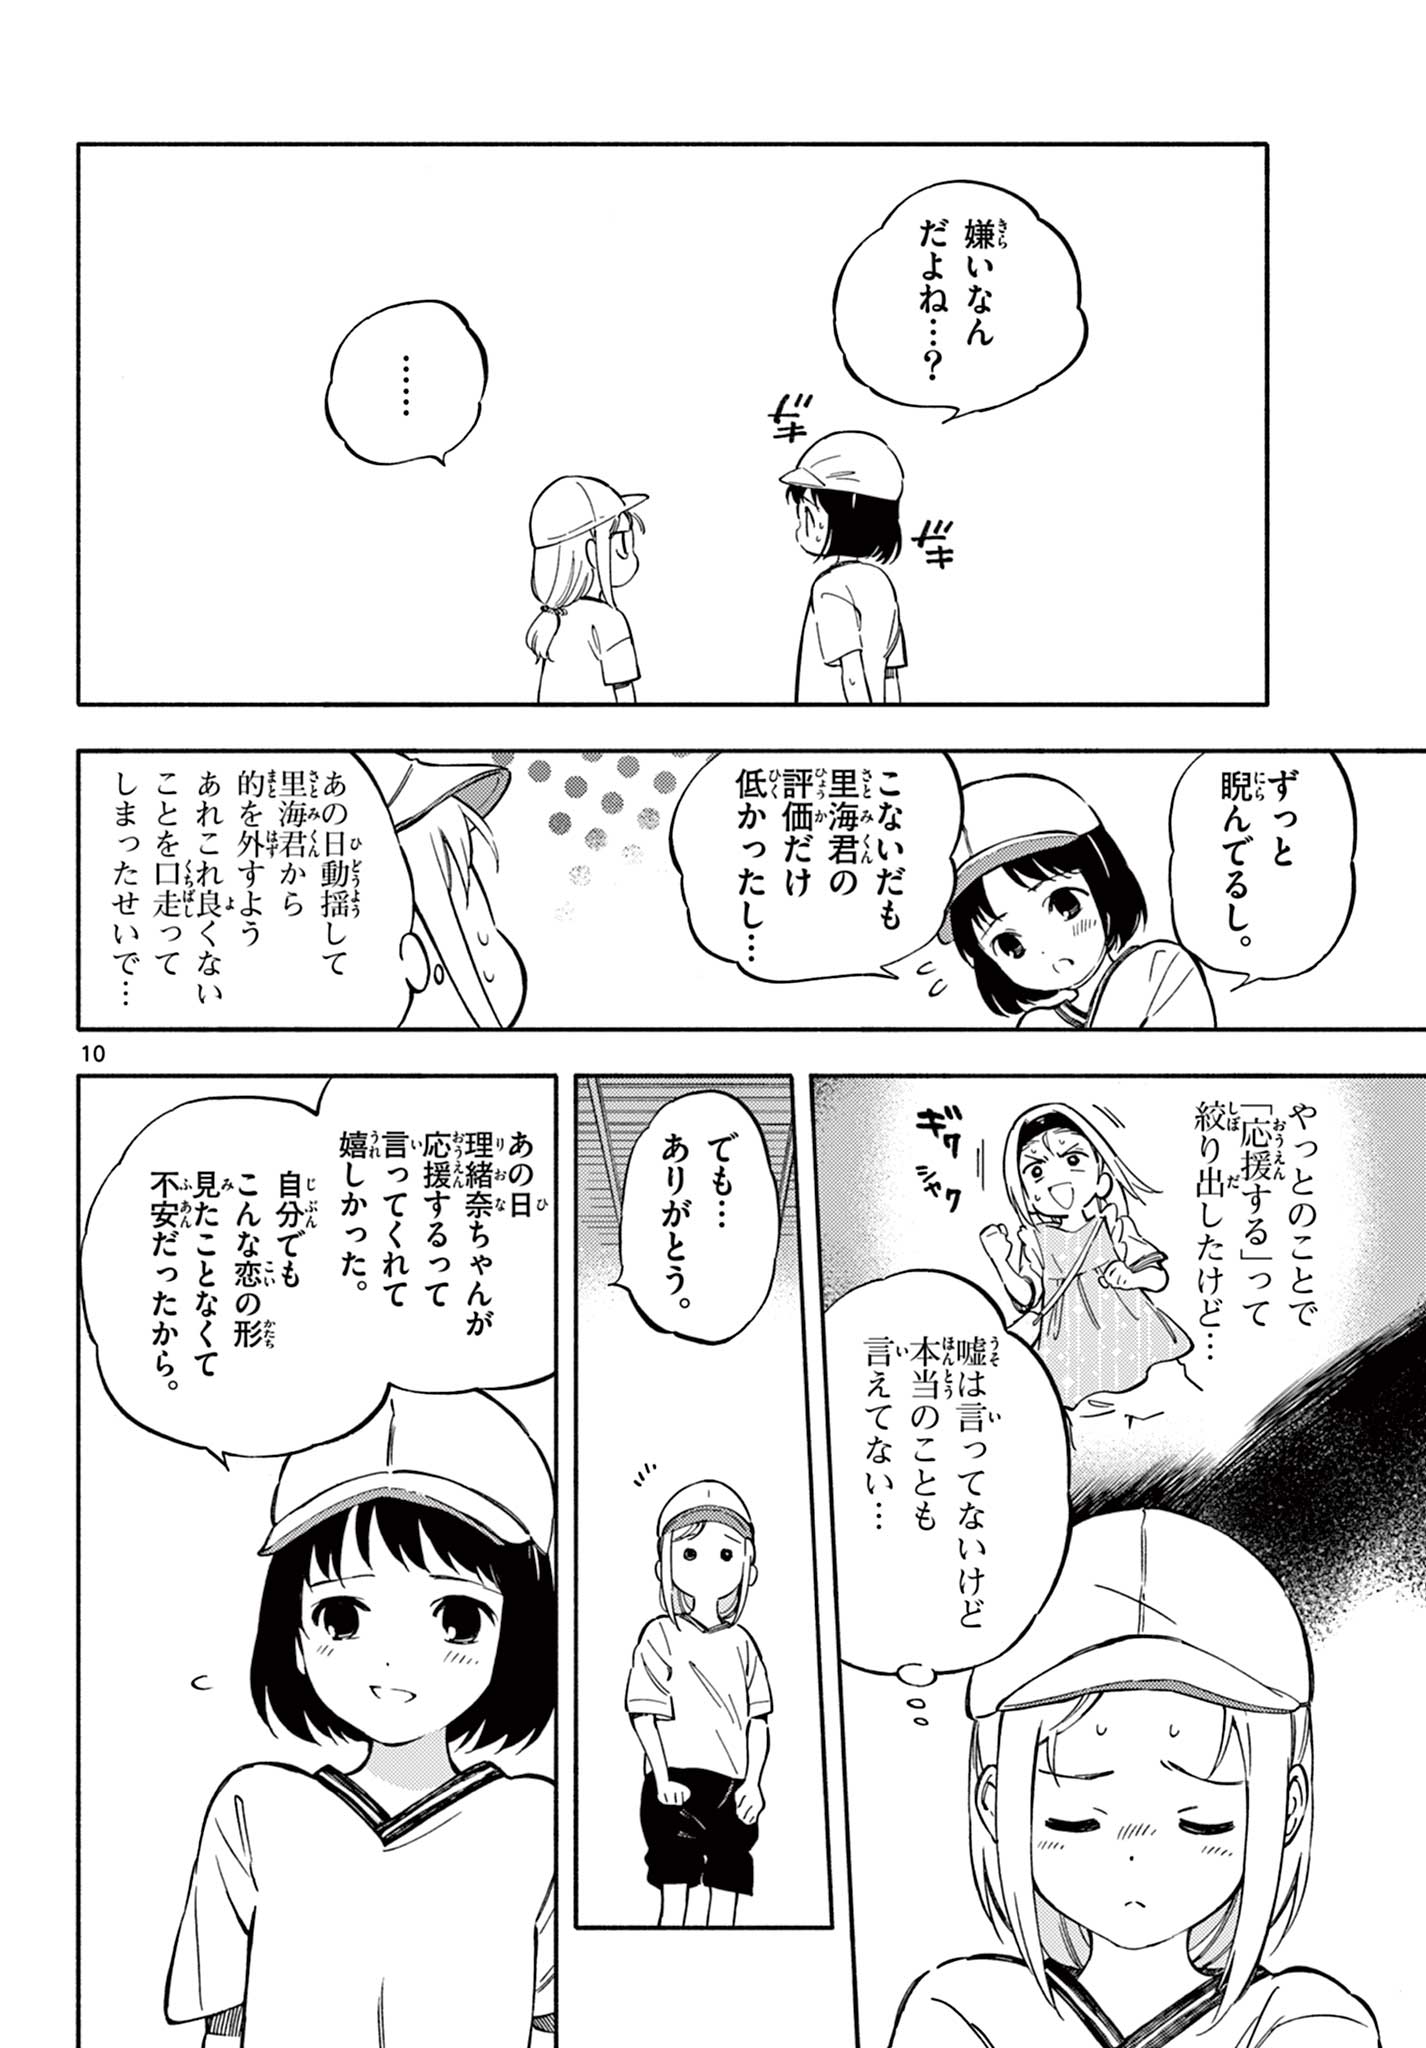 Nami no Shijima no Horizont - Chapter 15.1 - Page 10